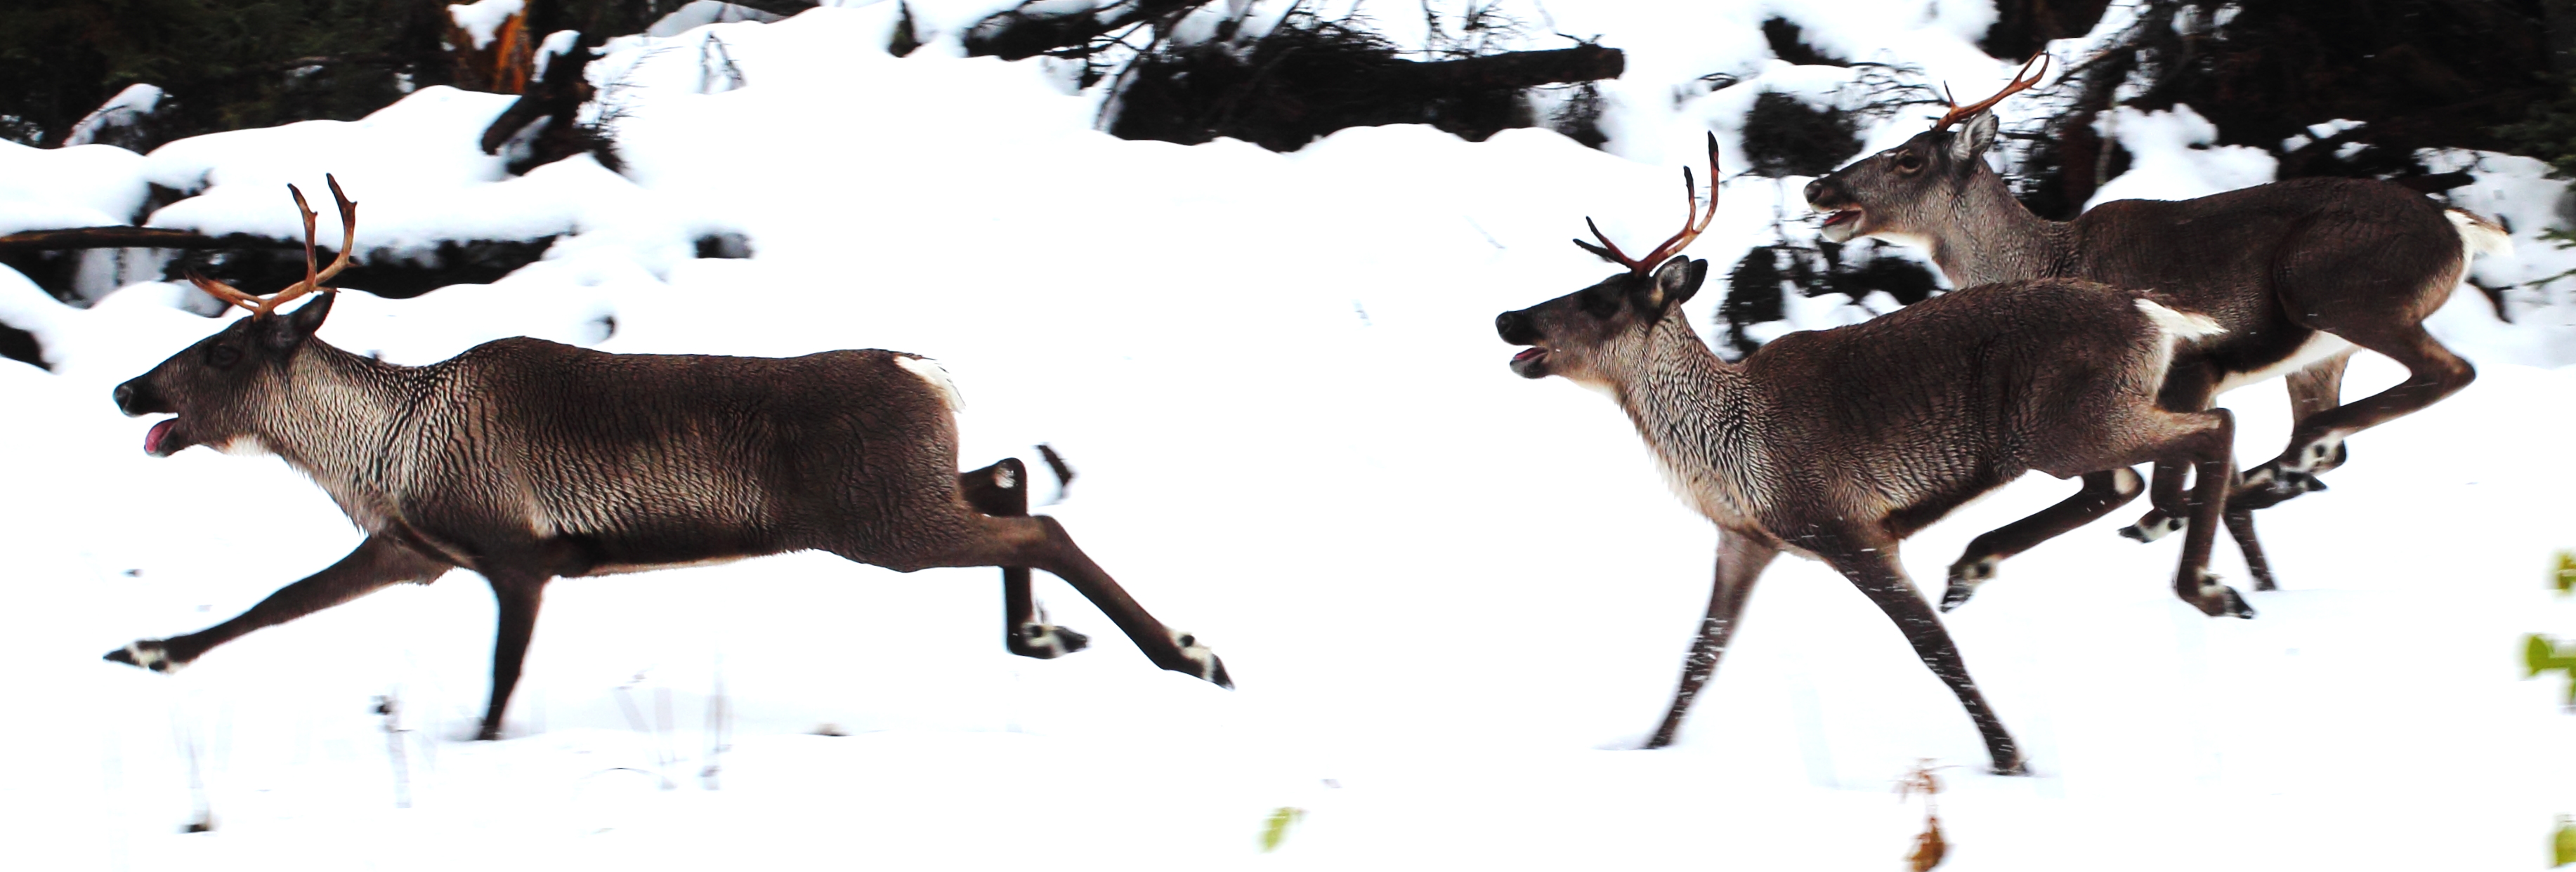 Running caribou photo